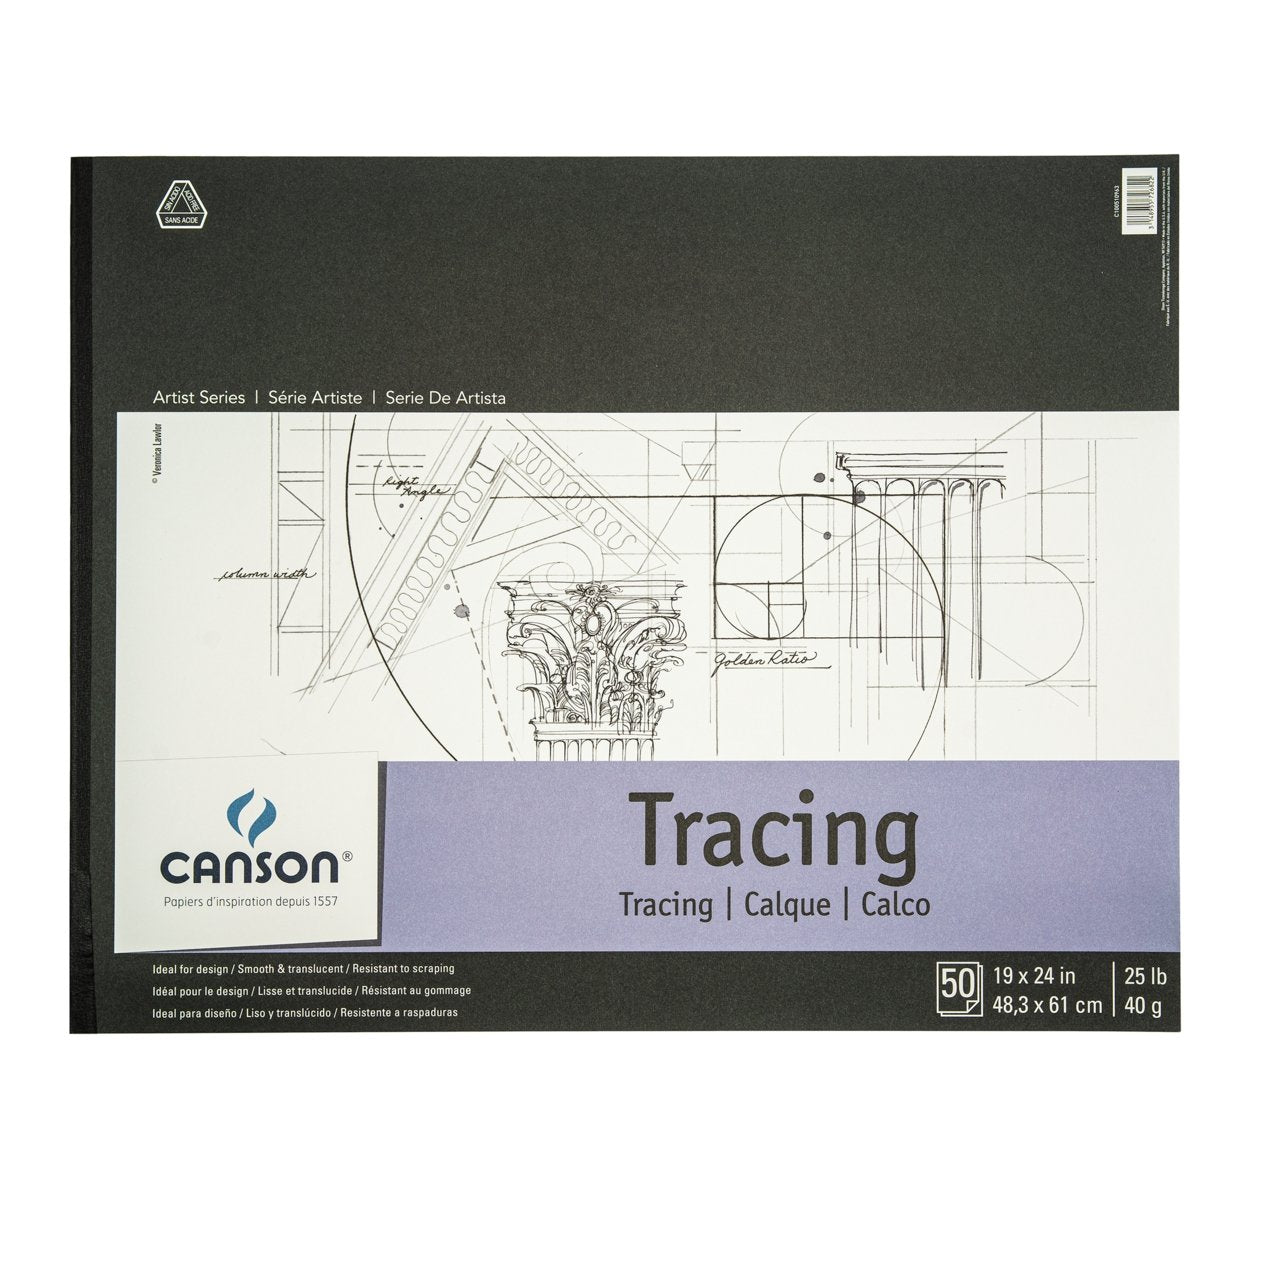 Canson Tracing Pad 25 lb - 50 Sheets 19X24 - merriartist.com